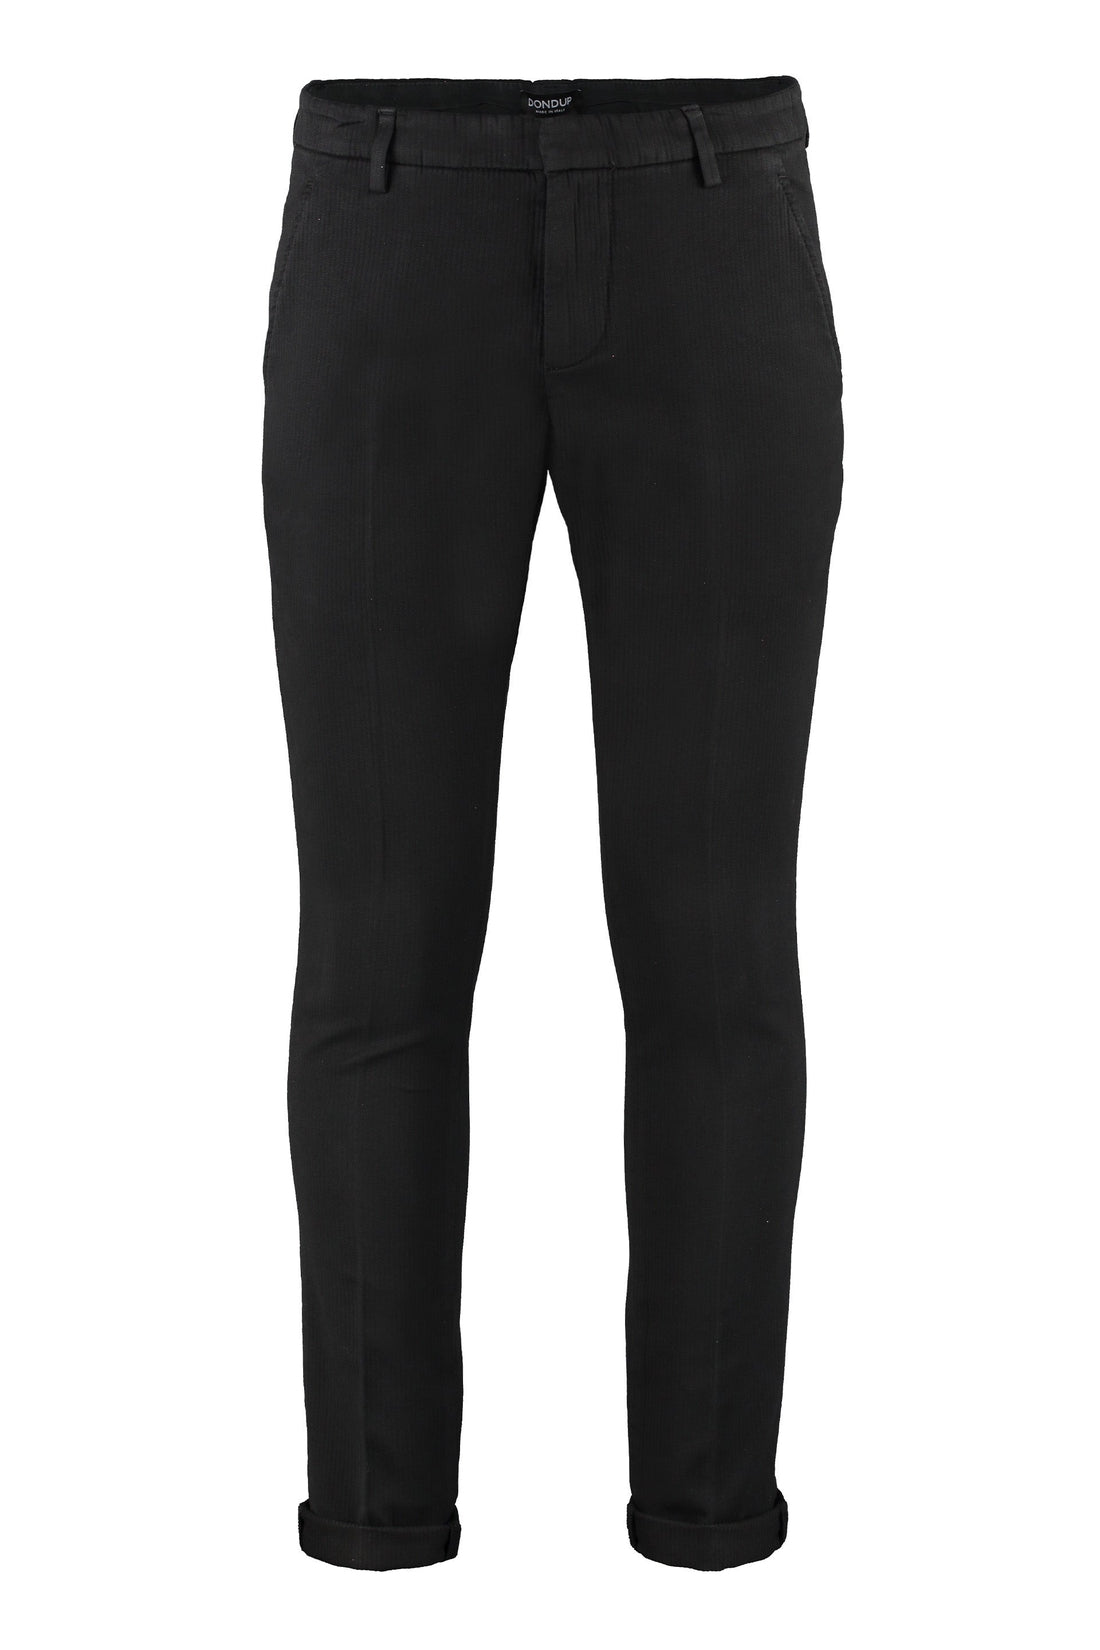 Dondup-OUTLET-SALE-Gaubert cotton Chino trousers-ARCHIVIST